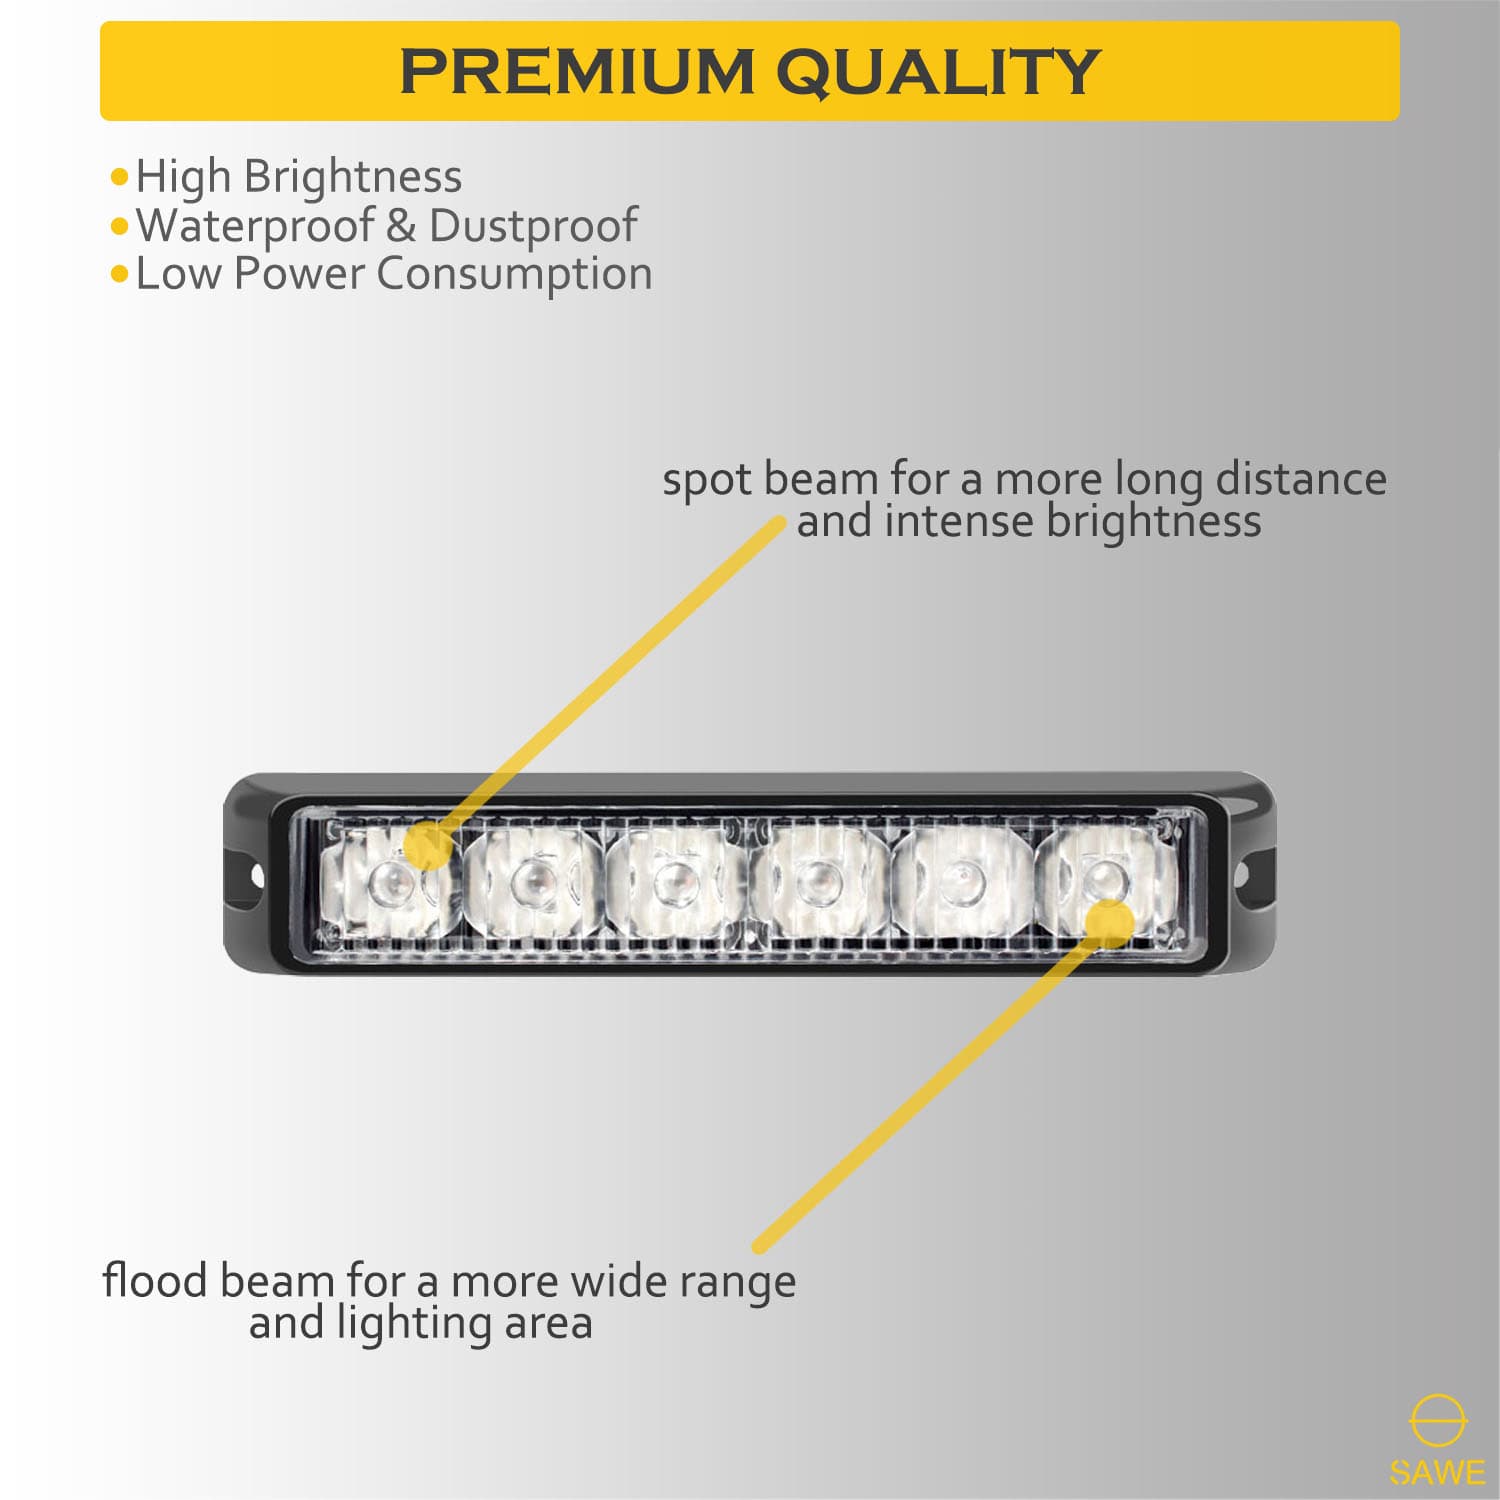 Premier Emergency LED Strobe Lights Bar for Offroad Car Truck Warning Hazard Flash Grille and Surface Mount Light - White 6-LED